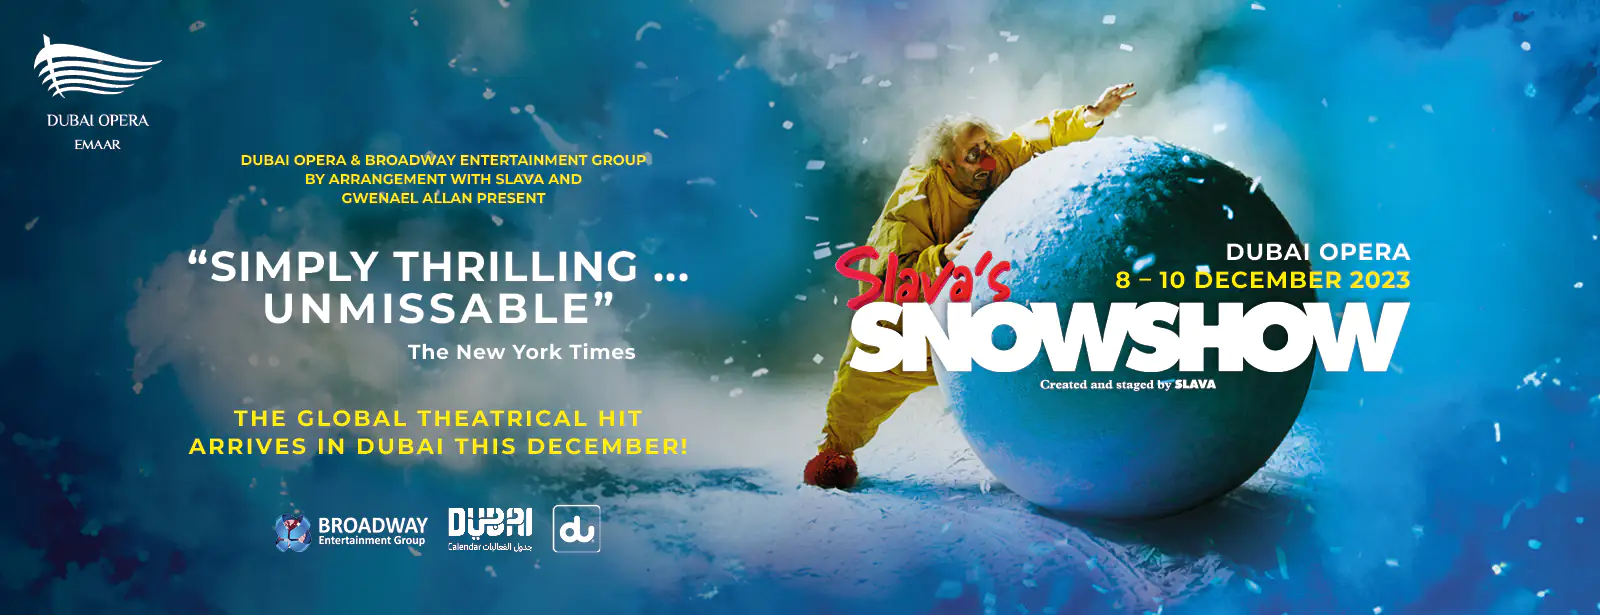 Slava’s SnowShow at Dubai Opera - Coming Soon in UAE